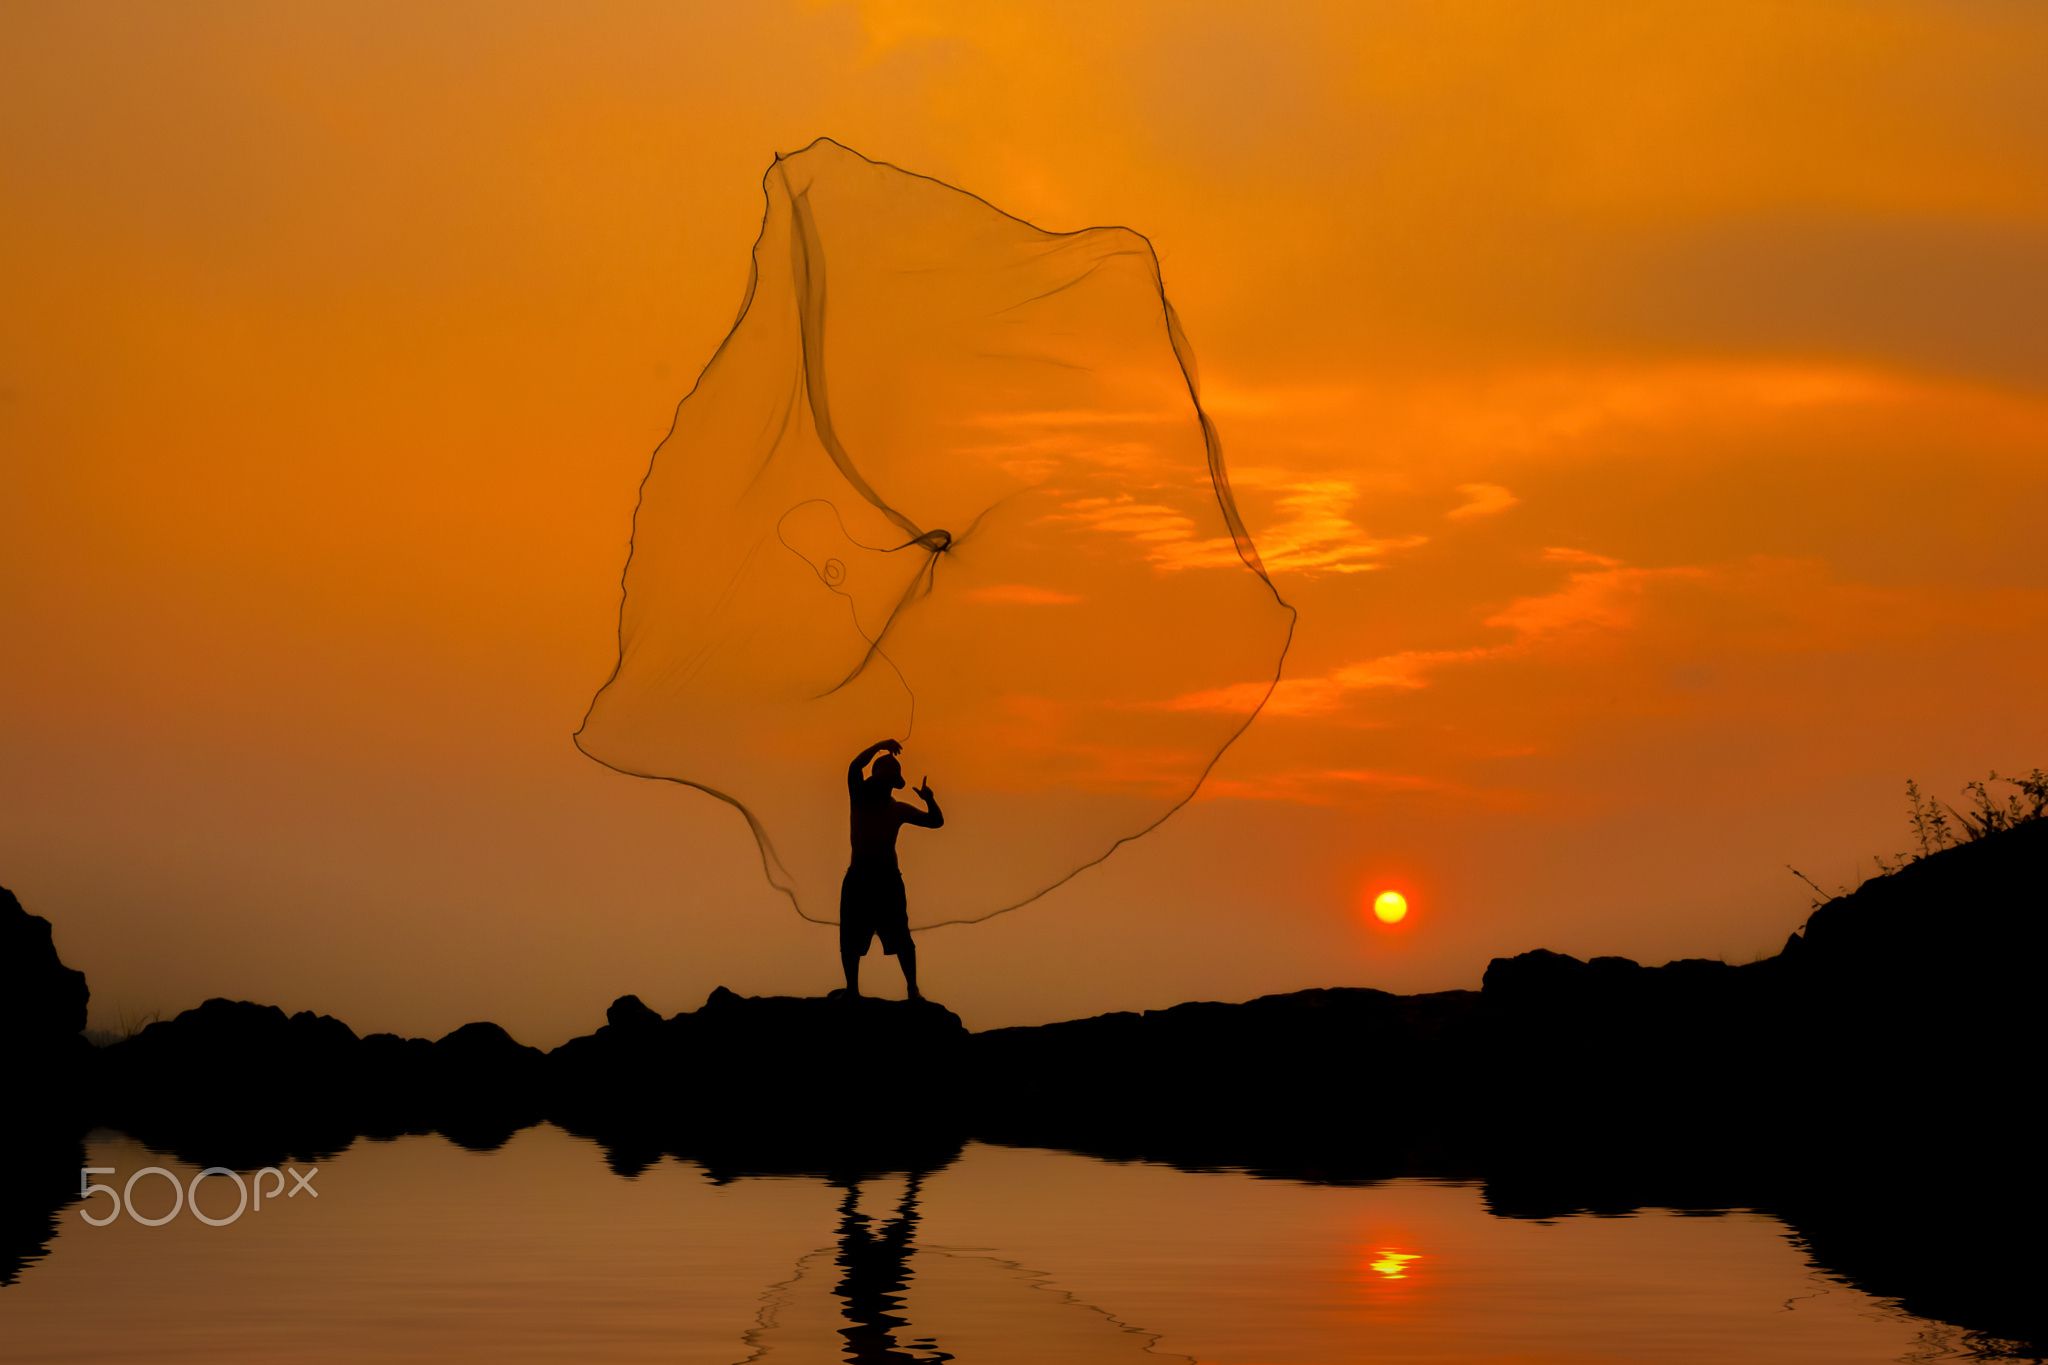 Fisherman fishing at sunset, Vietnam by Visoot Uthairam on 500px ...